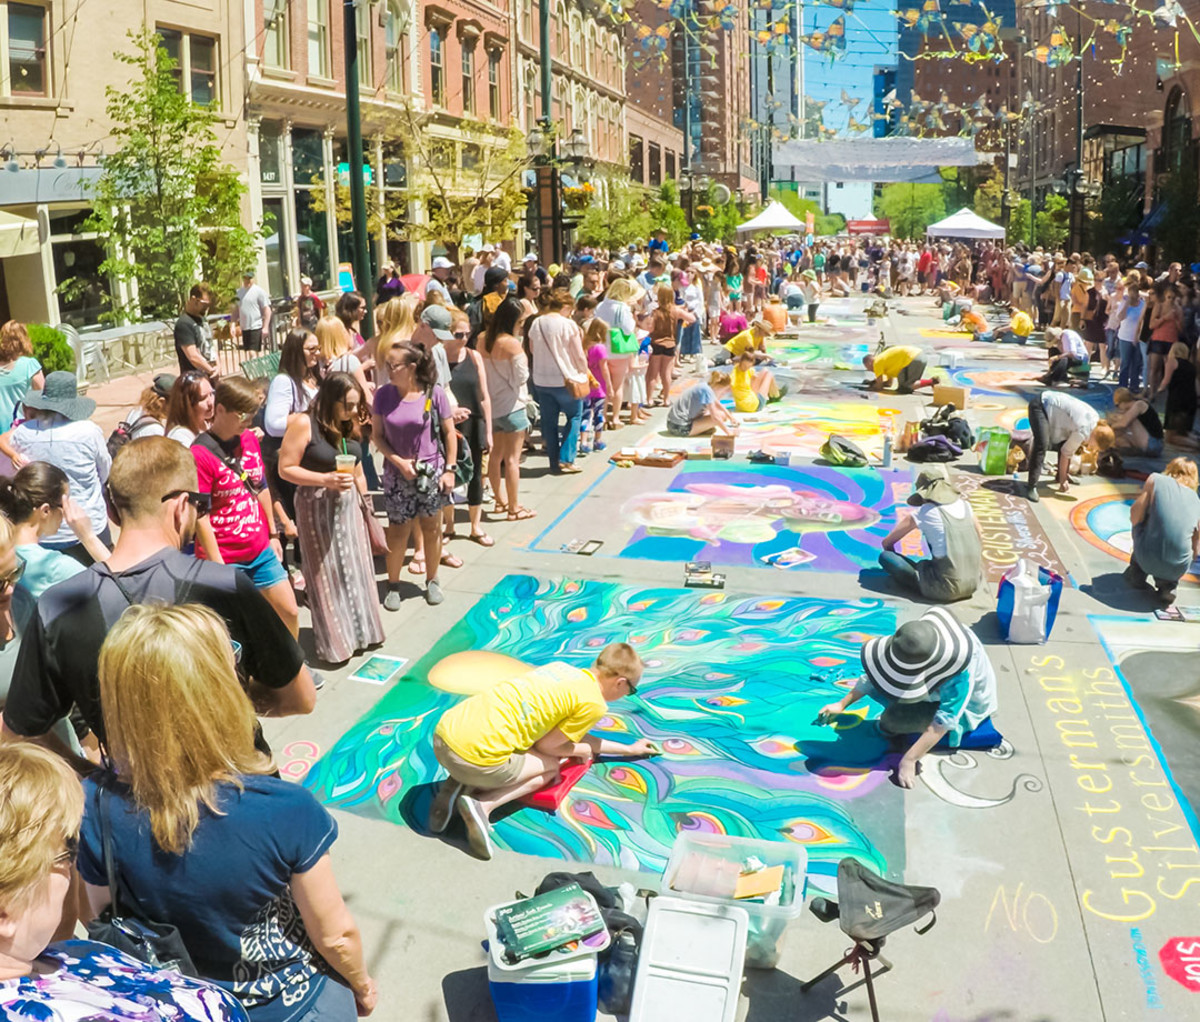 The Annual Chalk Festival on Larimer Square in Denver